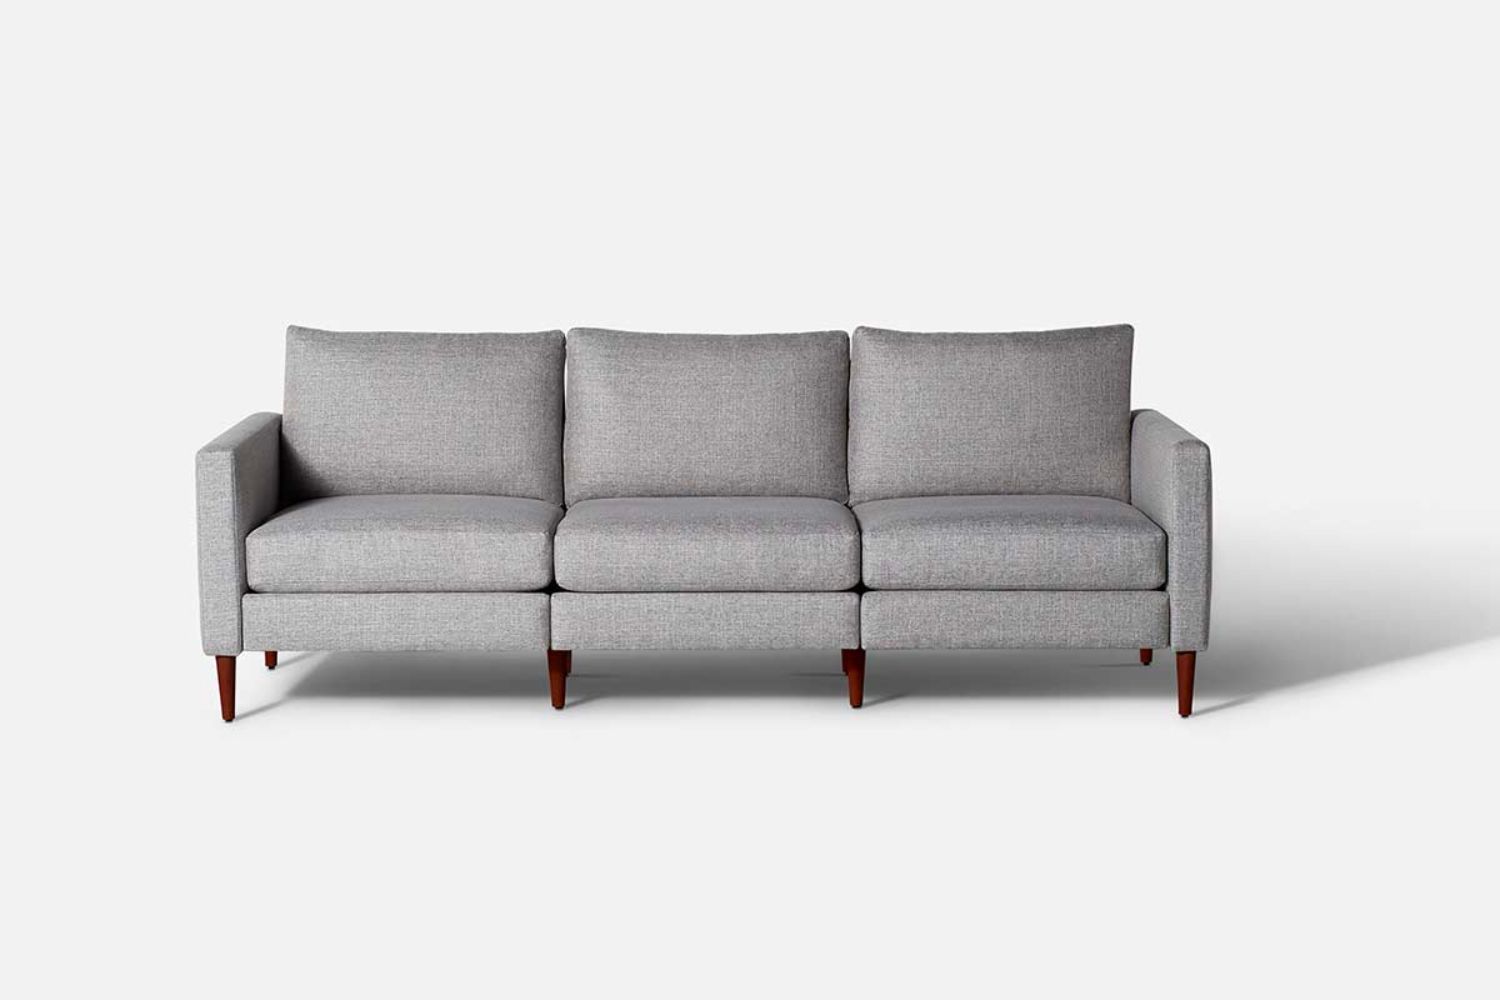 The Best Sofa Brands Option: Allform